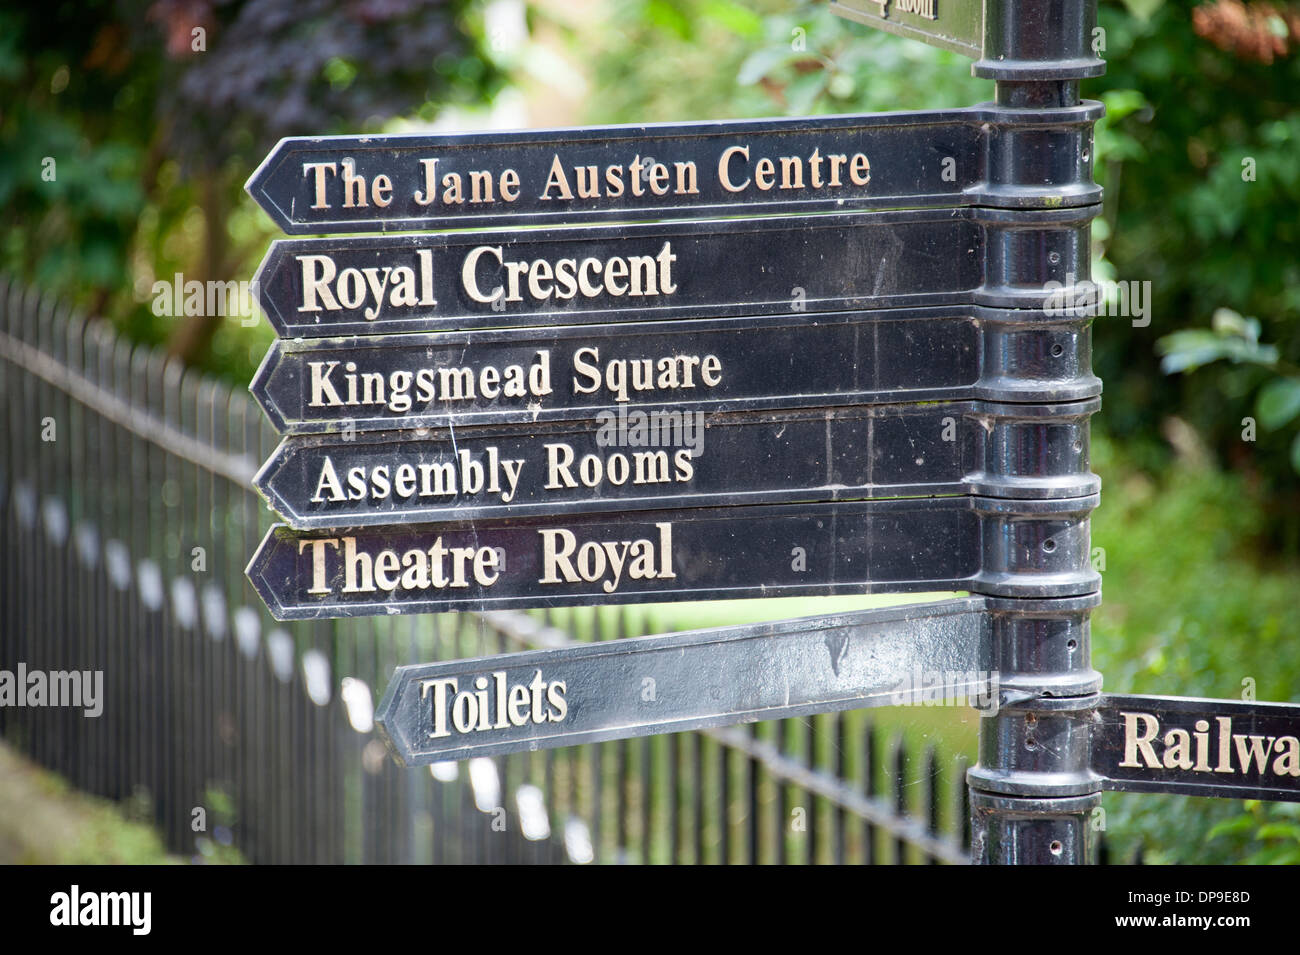 Bath Somerset Royal crescent Jane Austen Centre Stock Photo